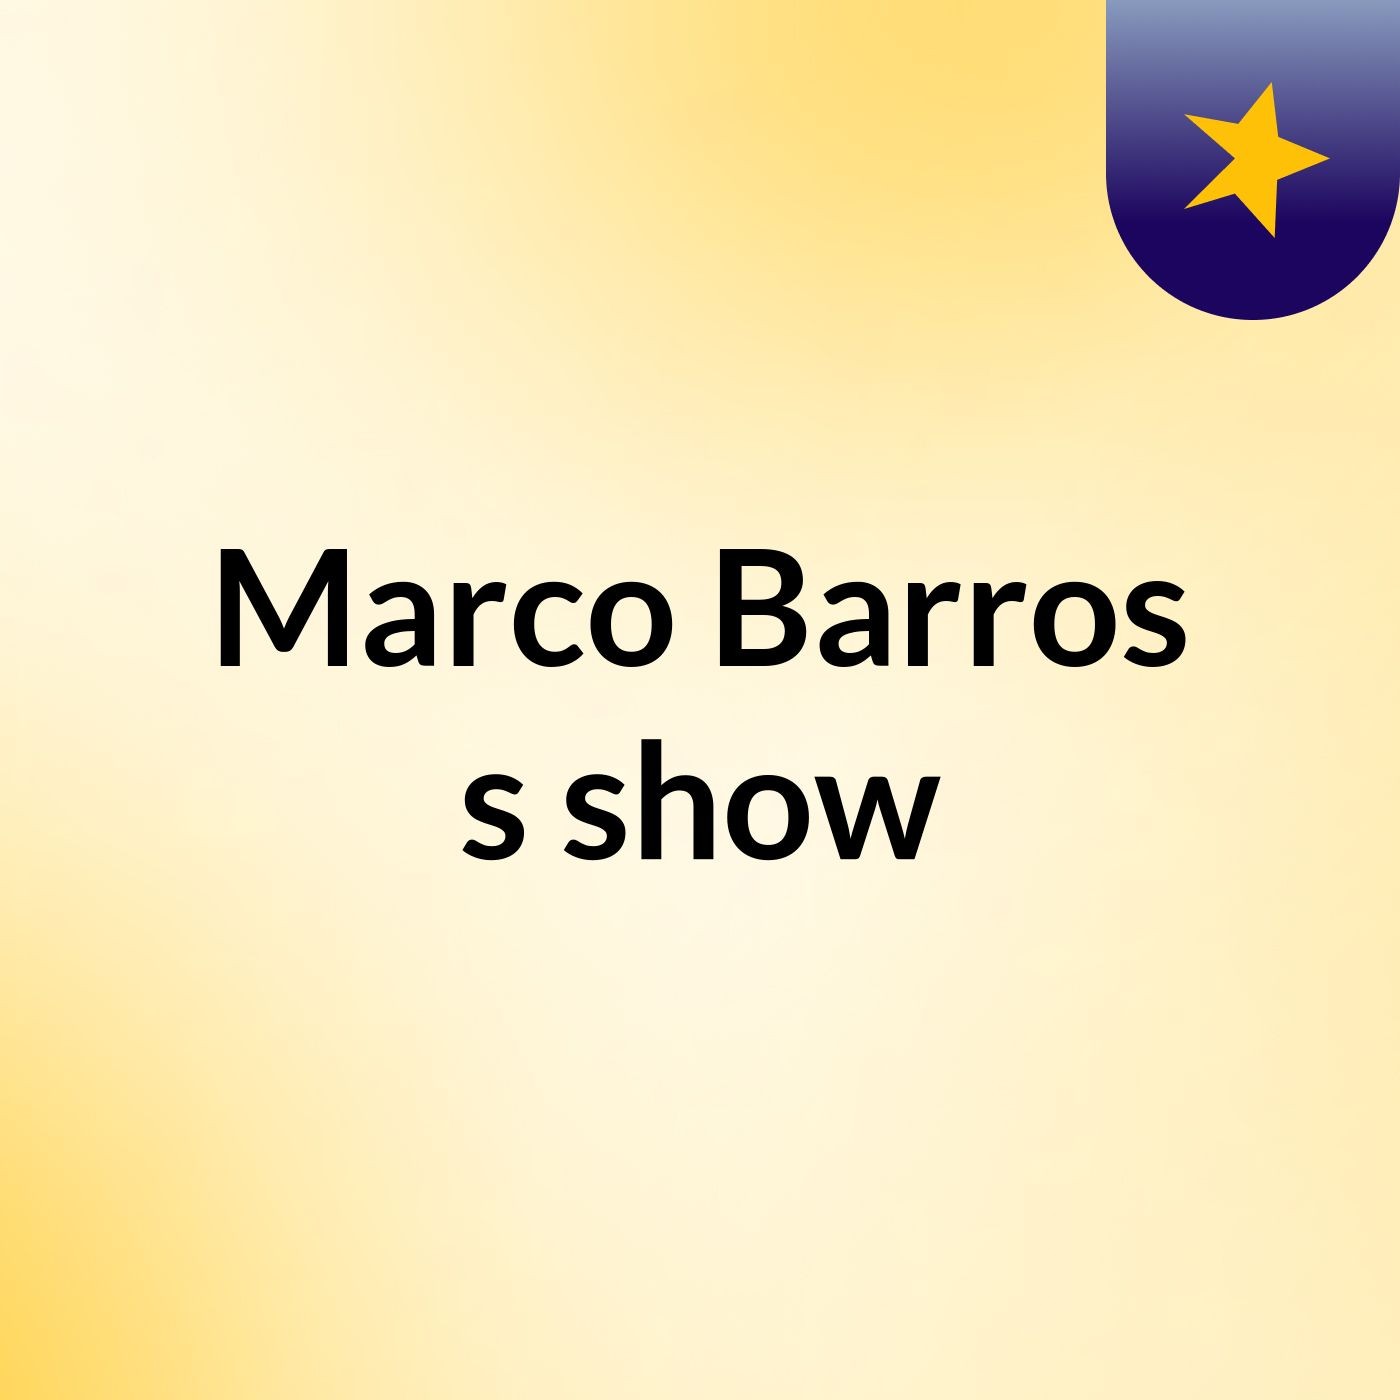 Marco Barros's show